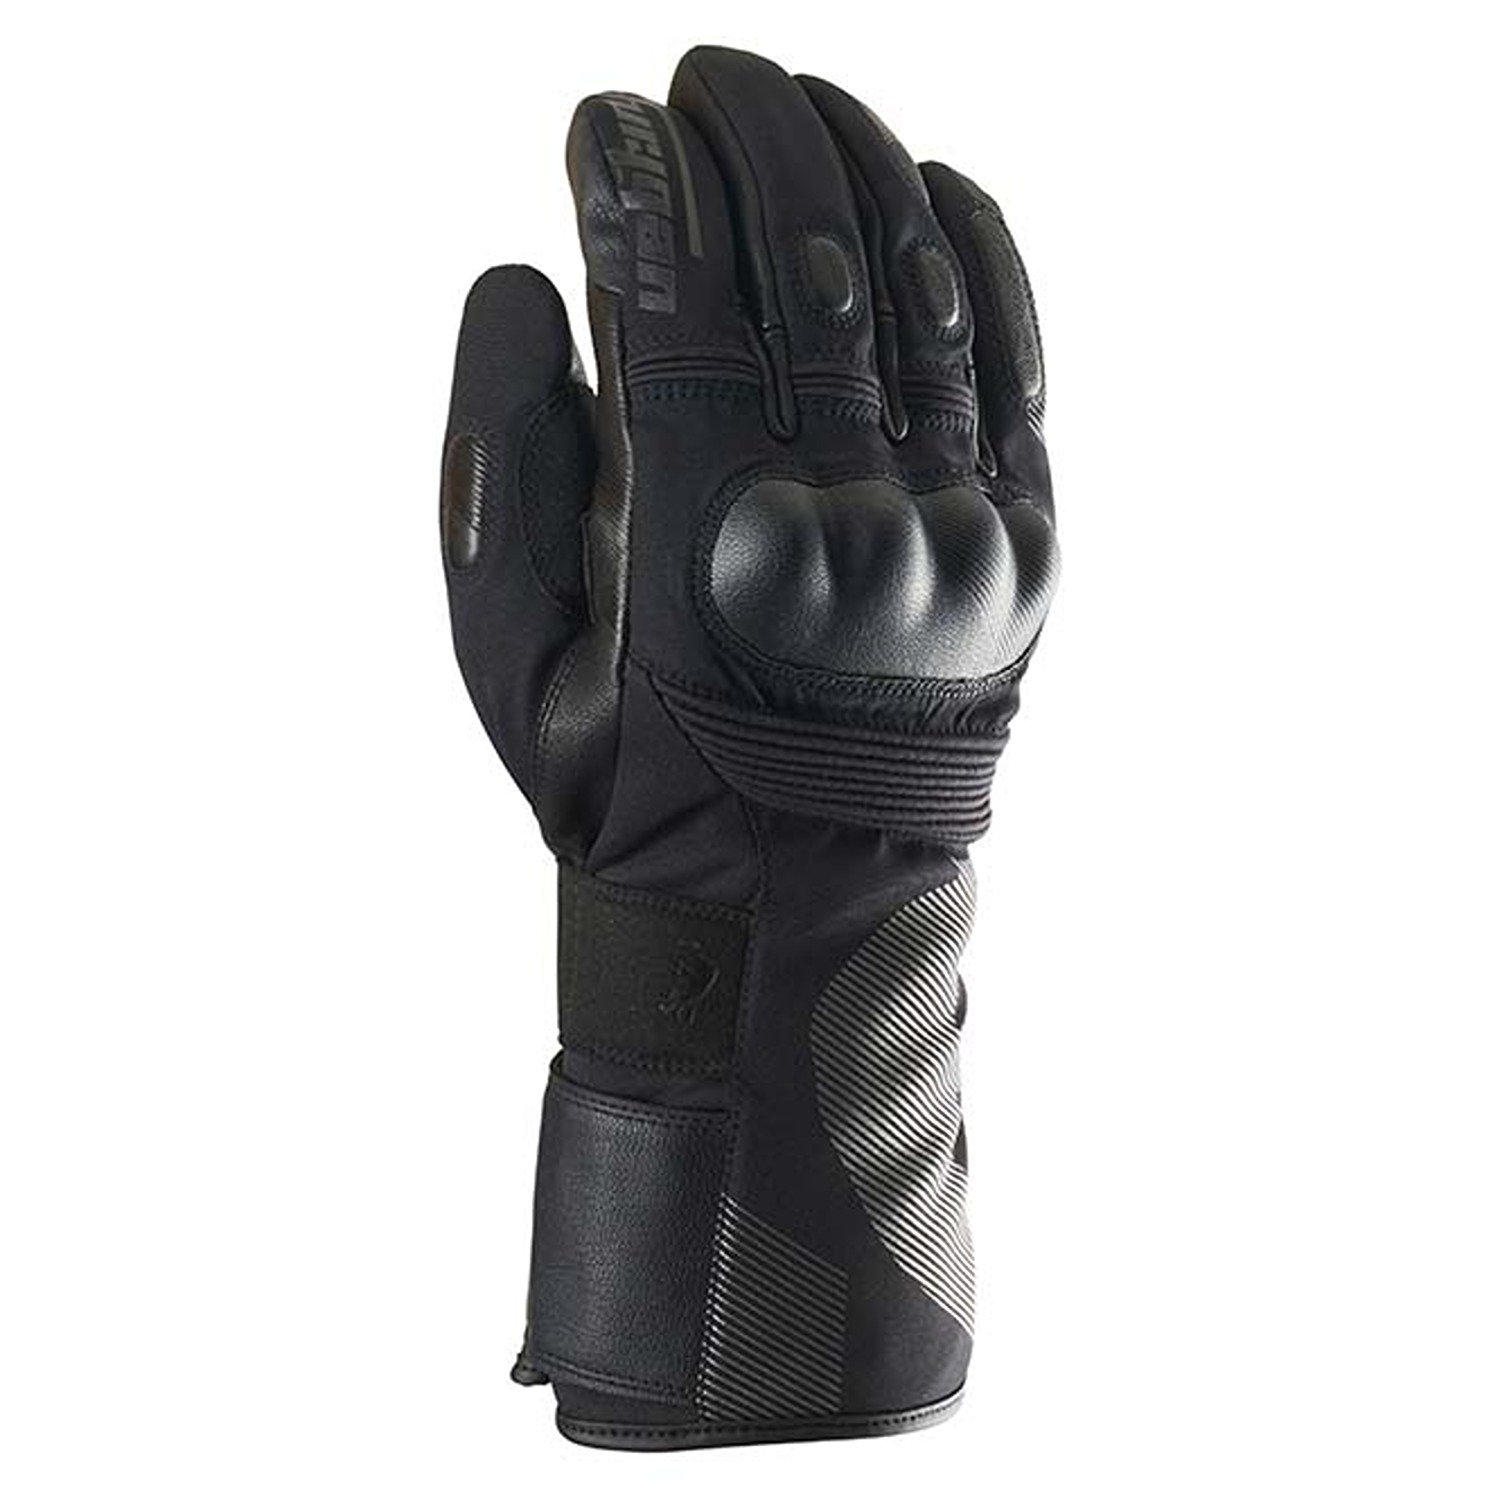 Image of Furygan Watts 375 Gloves Black Size S ID 3435980358204